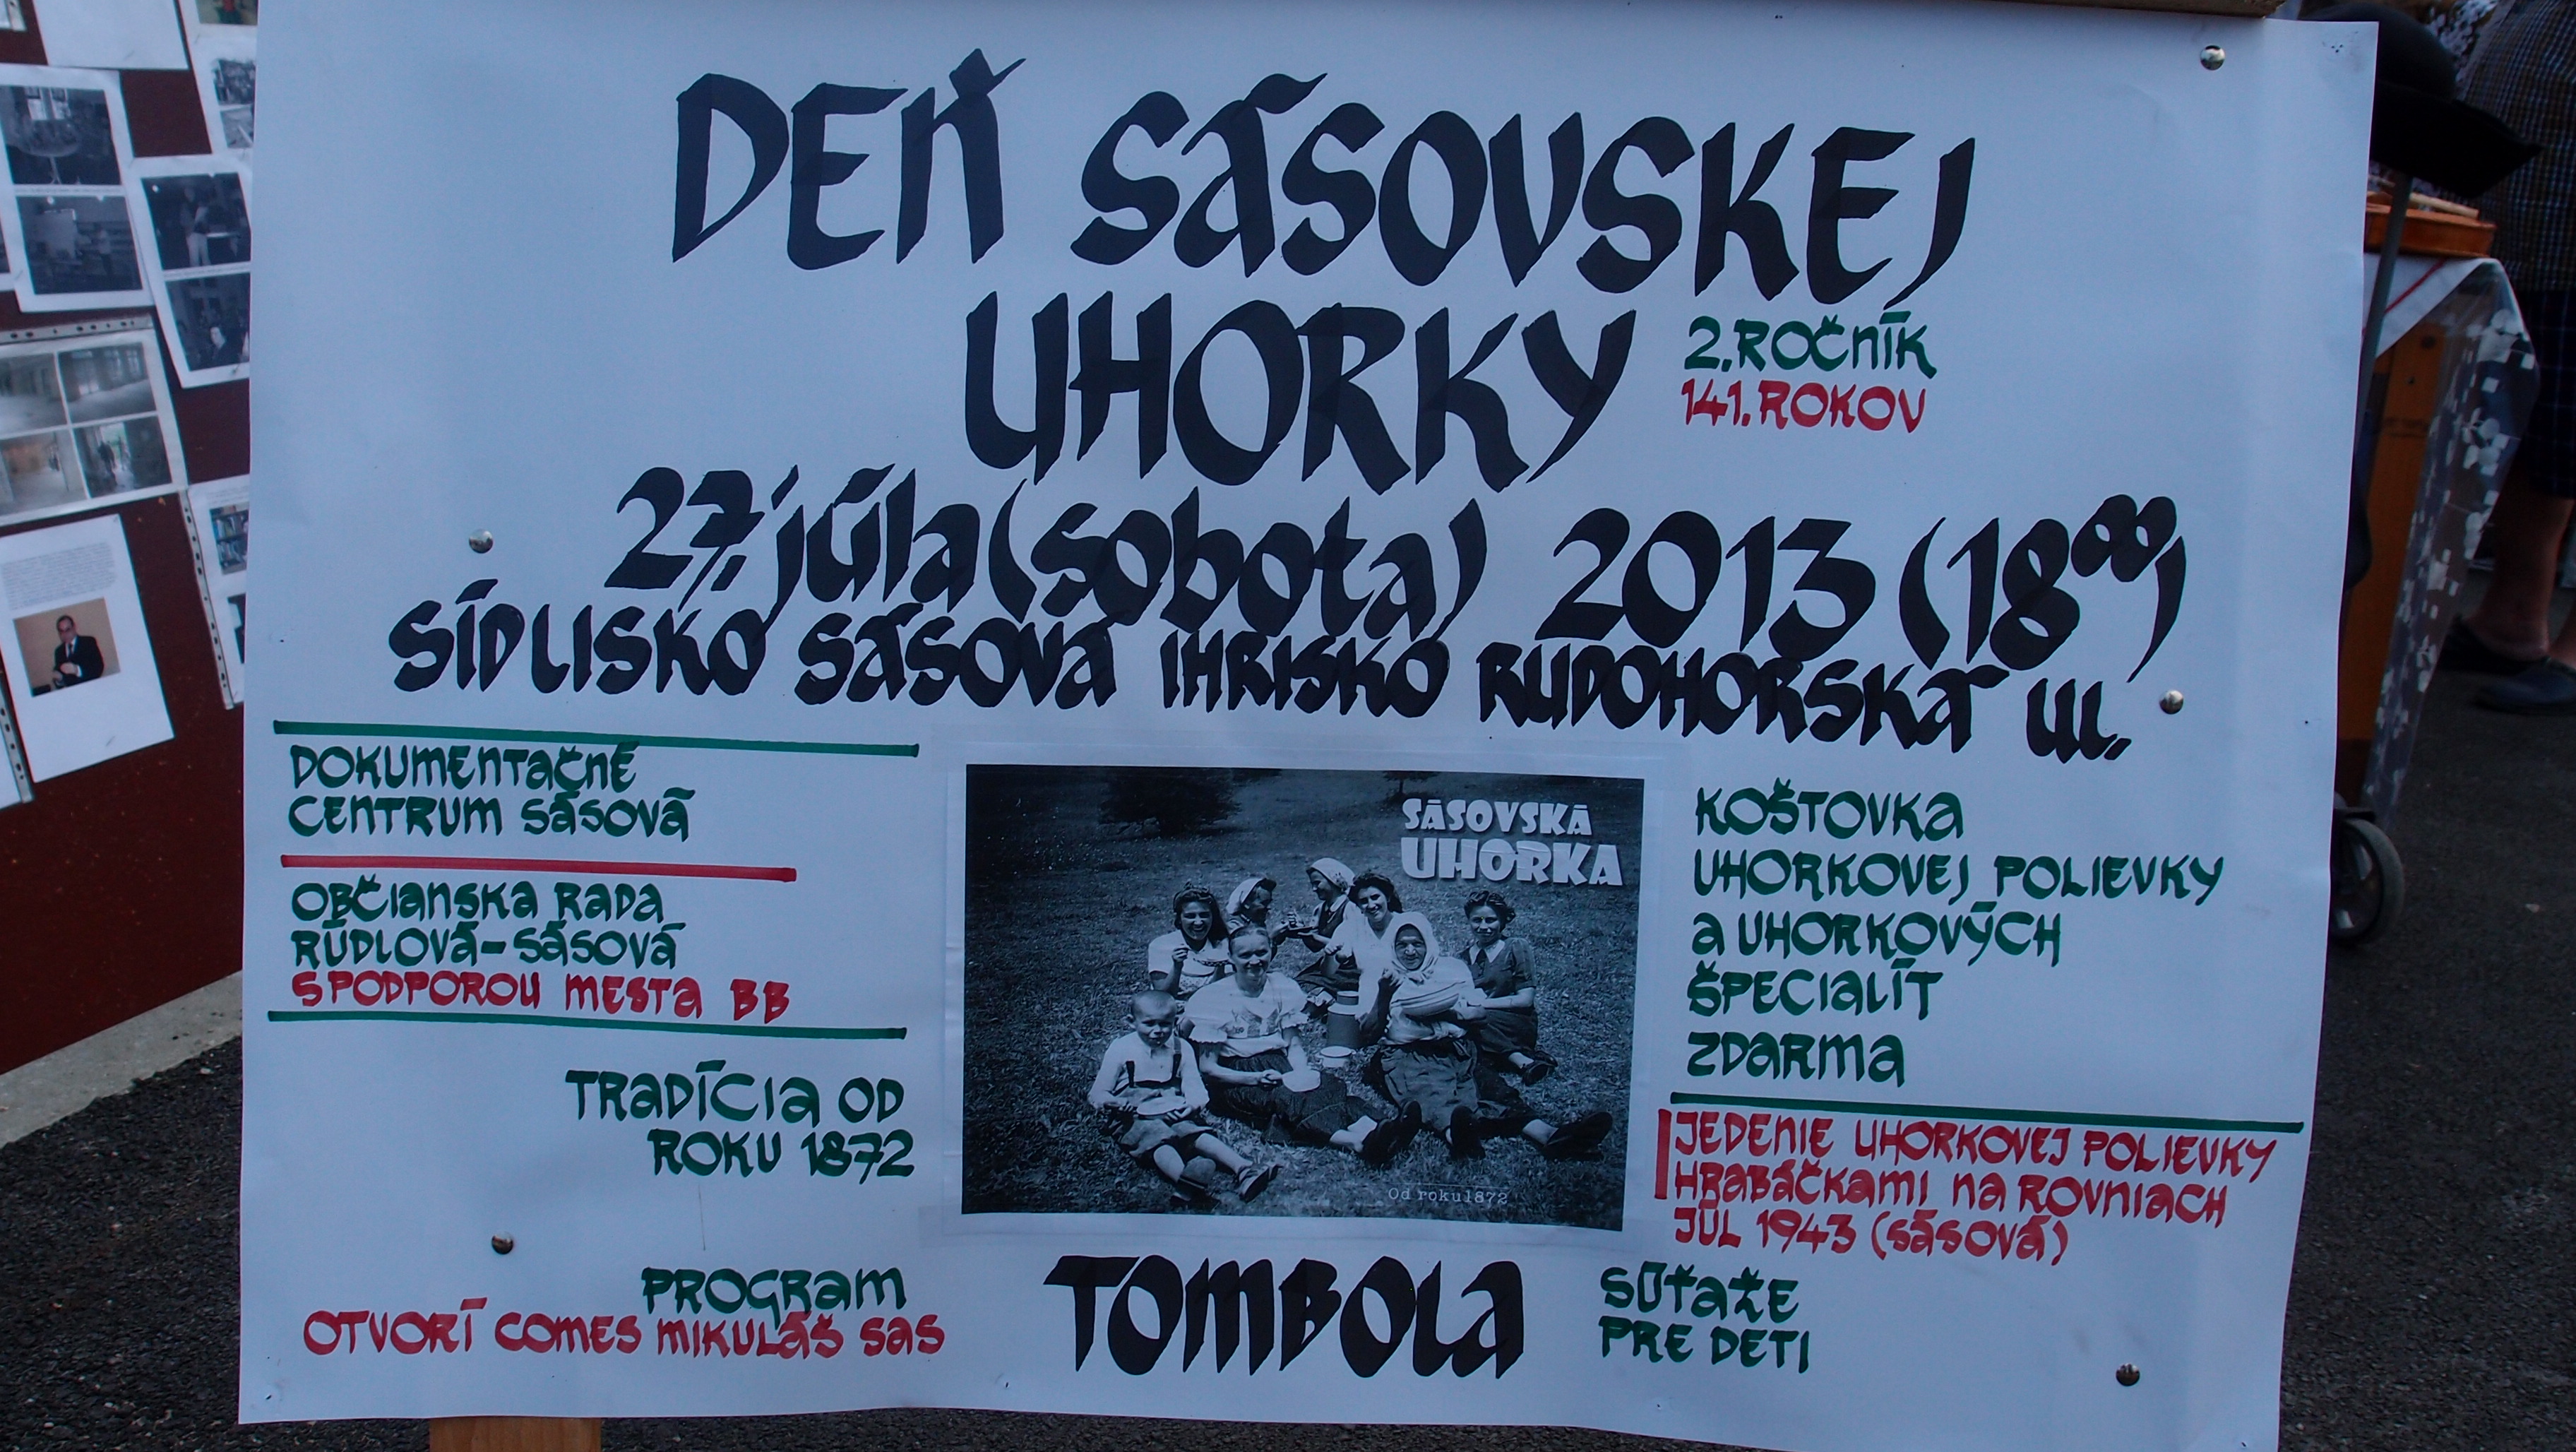 De Ssovskej uhorky 2013 - 2.ronk